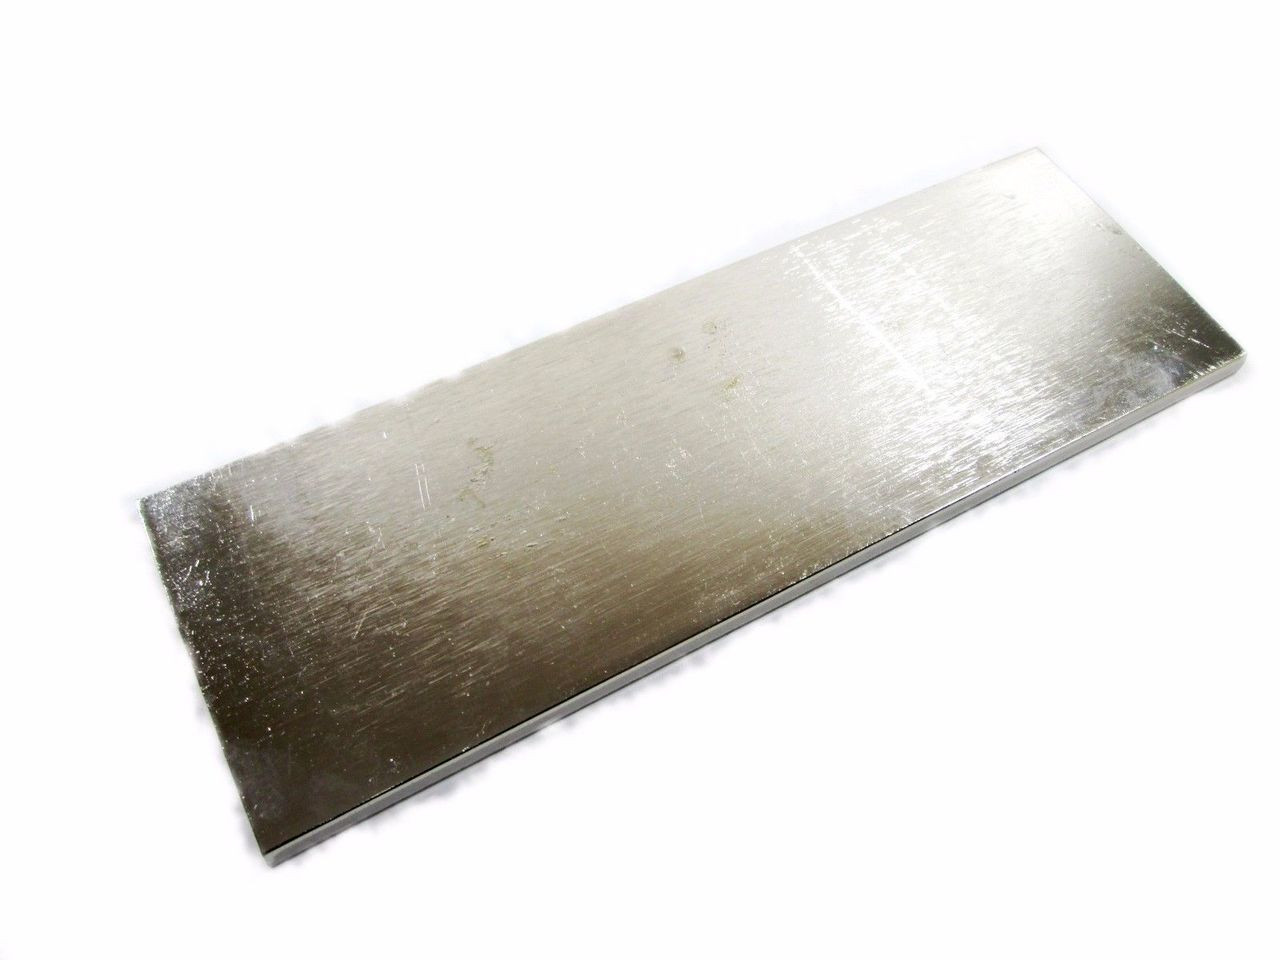 6" Professional Diamond Sharpening Sone Fine Grit Tools Knives & Blades WW173